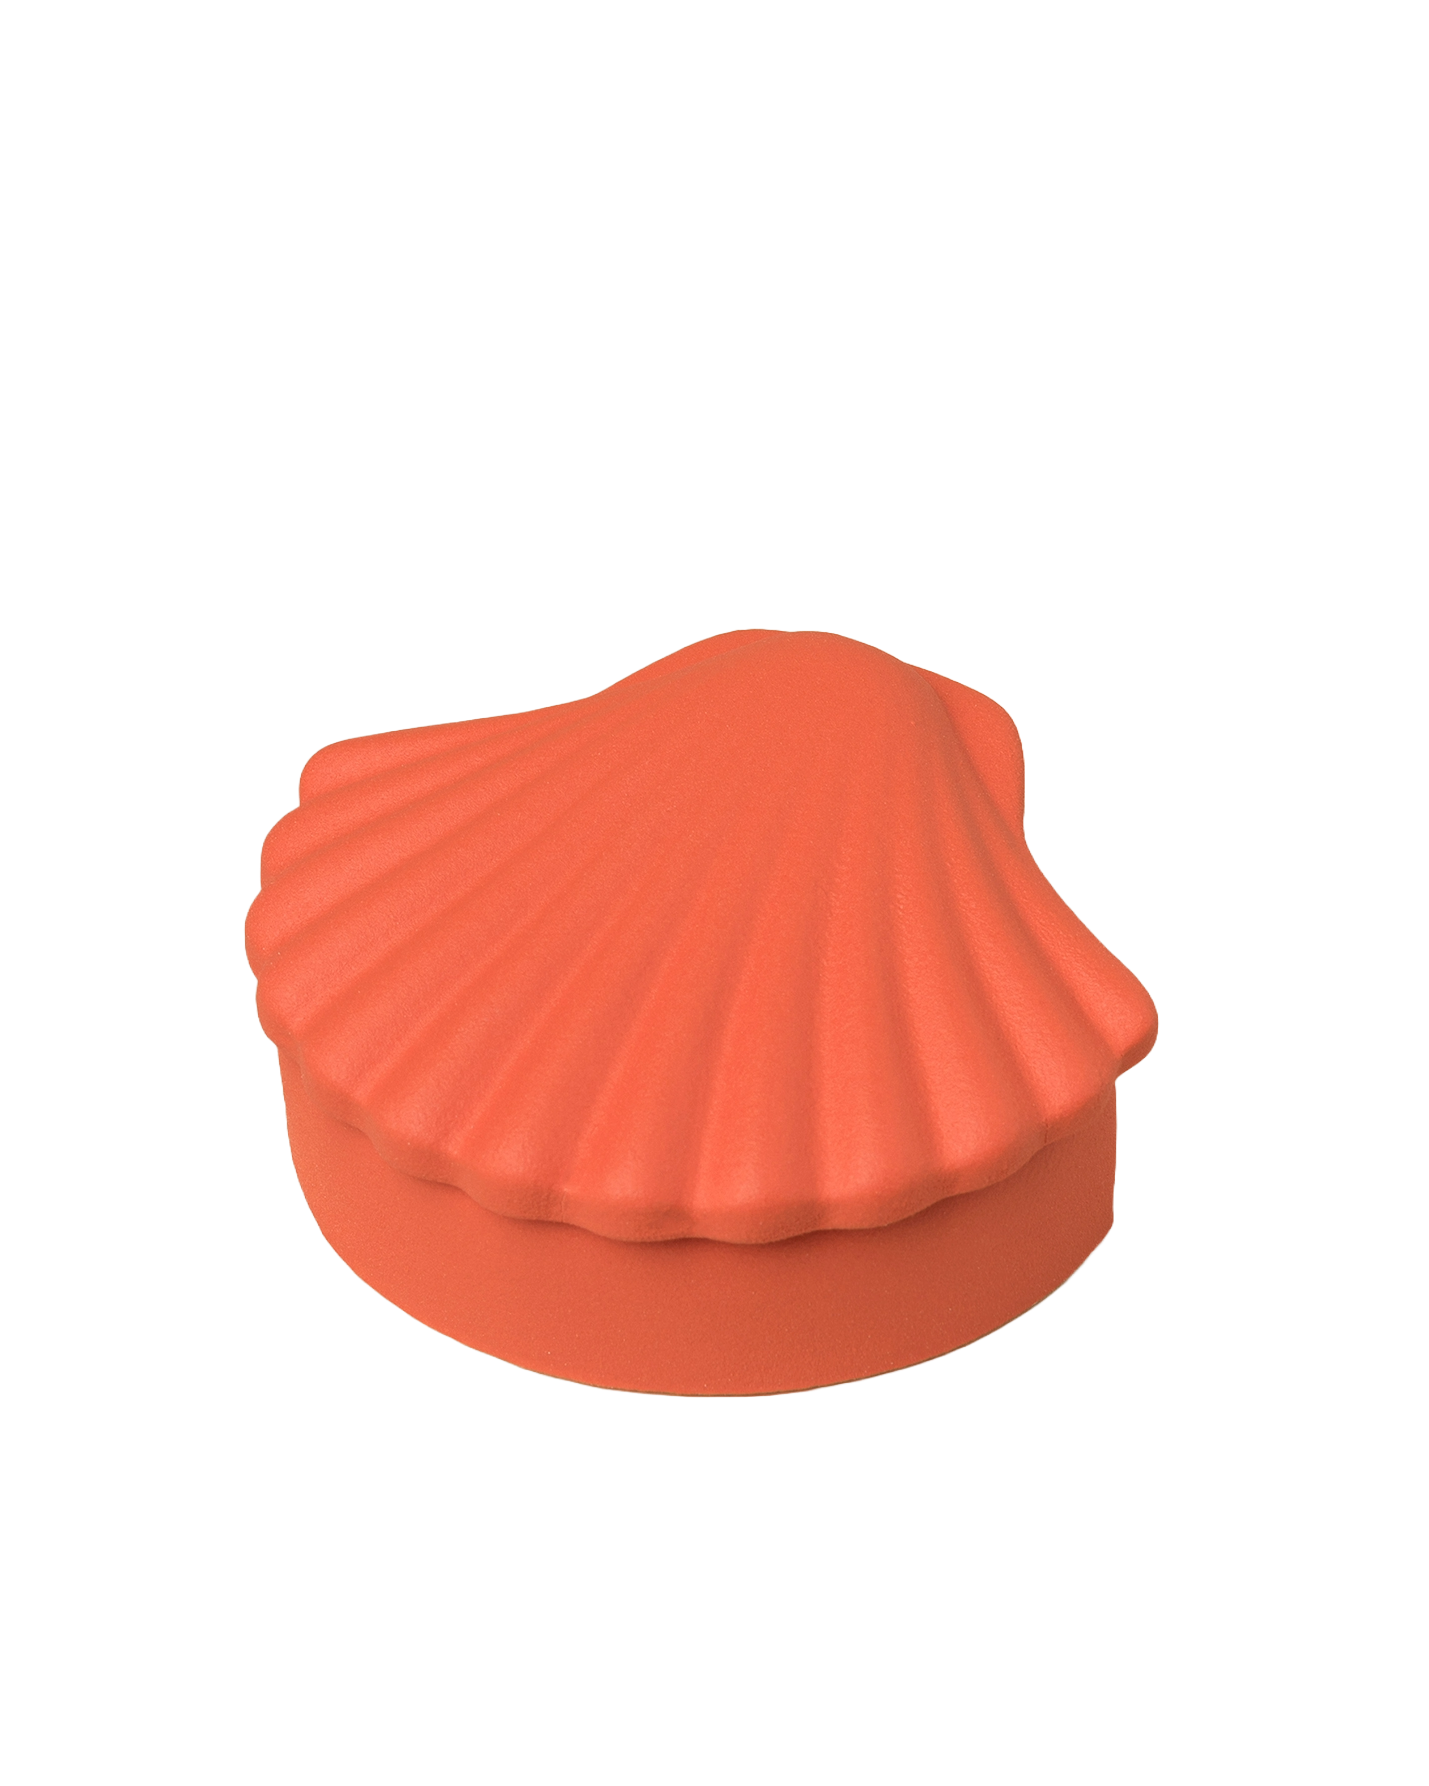 Los Objetos Decorativos Red Orange Seashell Box